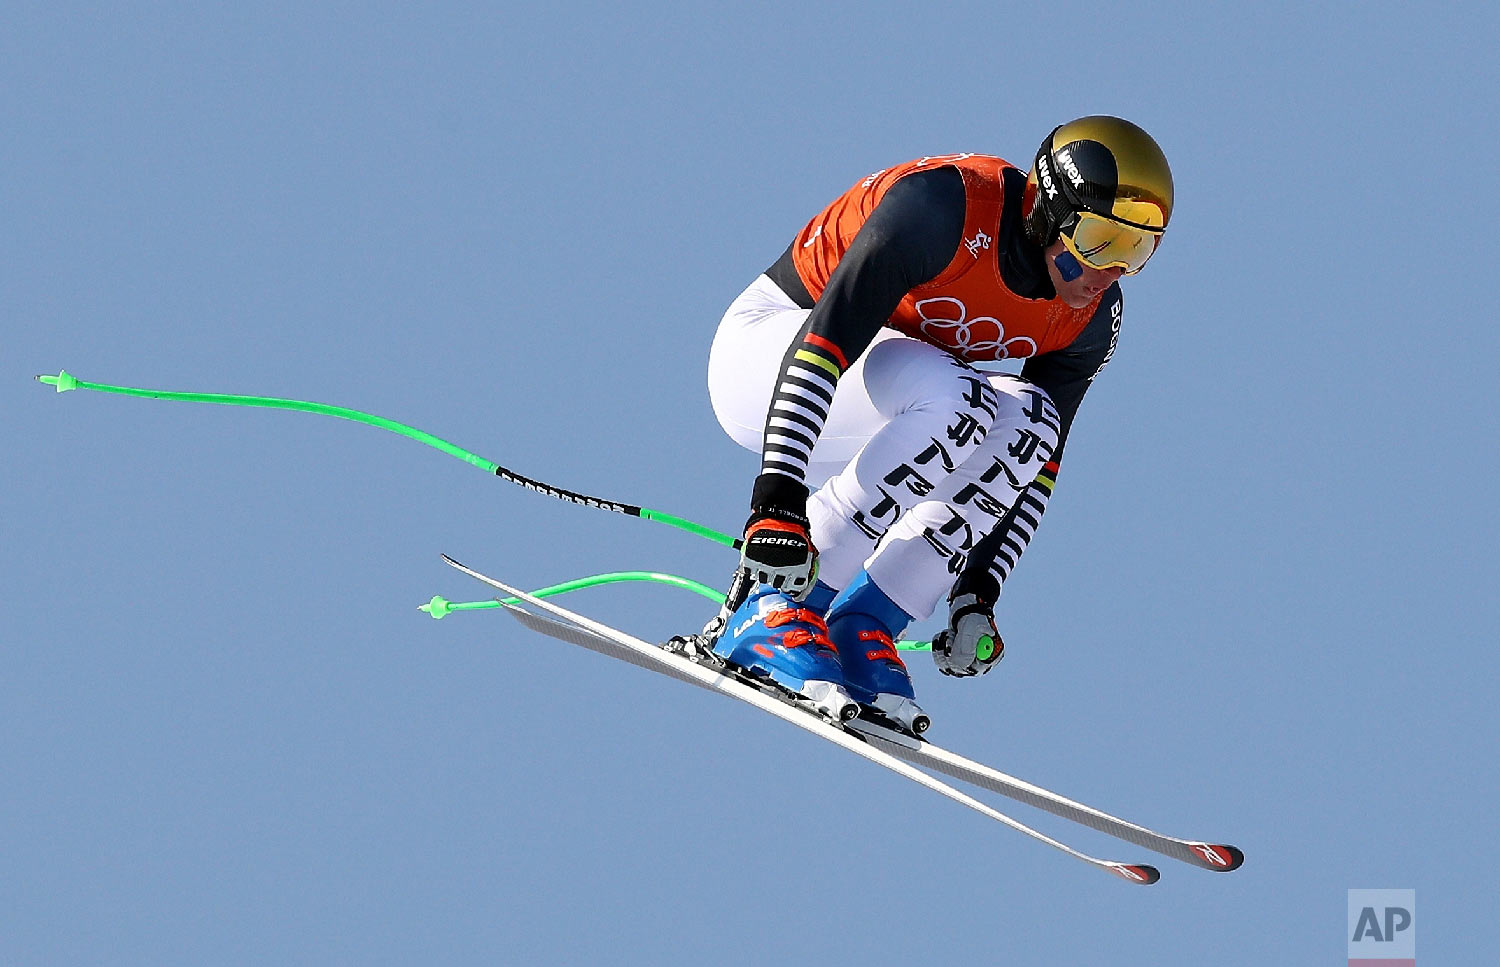  Germany's Thomas Dressen makes a jump in Men's Downhill training at the 2018 Winter Olympics in Jeongseon, South Korea, Thursday, Feb. 8, 2018. (AP Photo/Alessandro Trovati) 